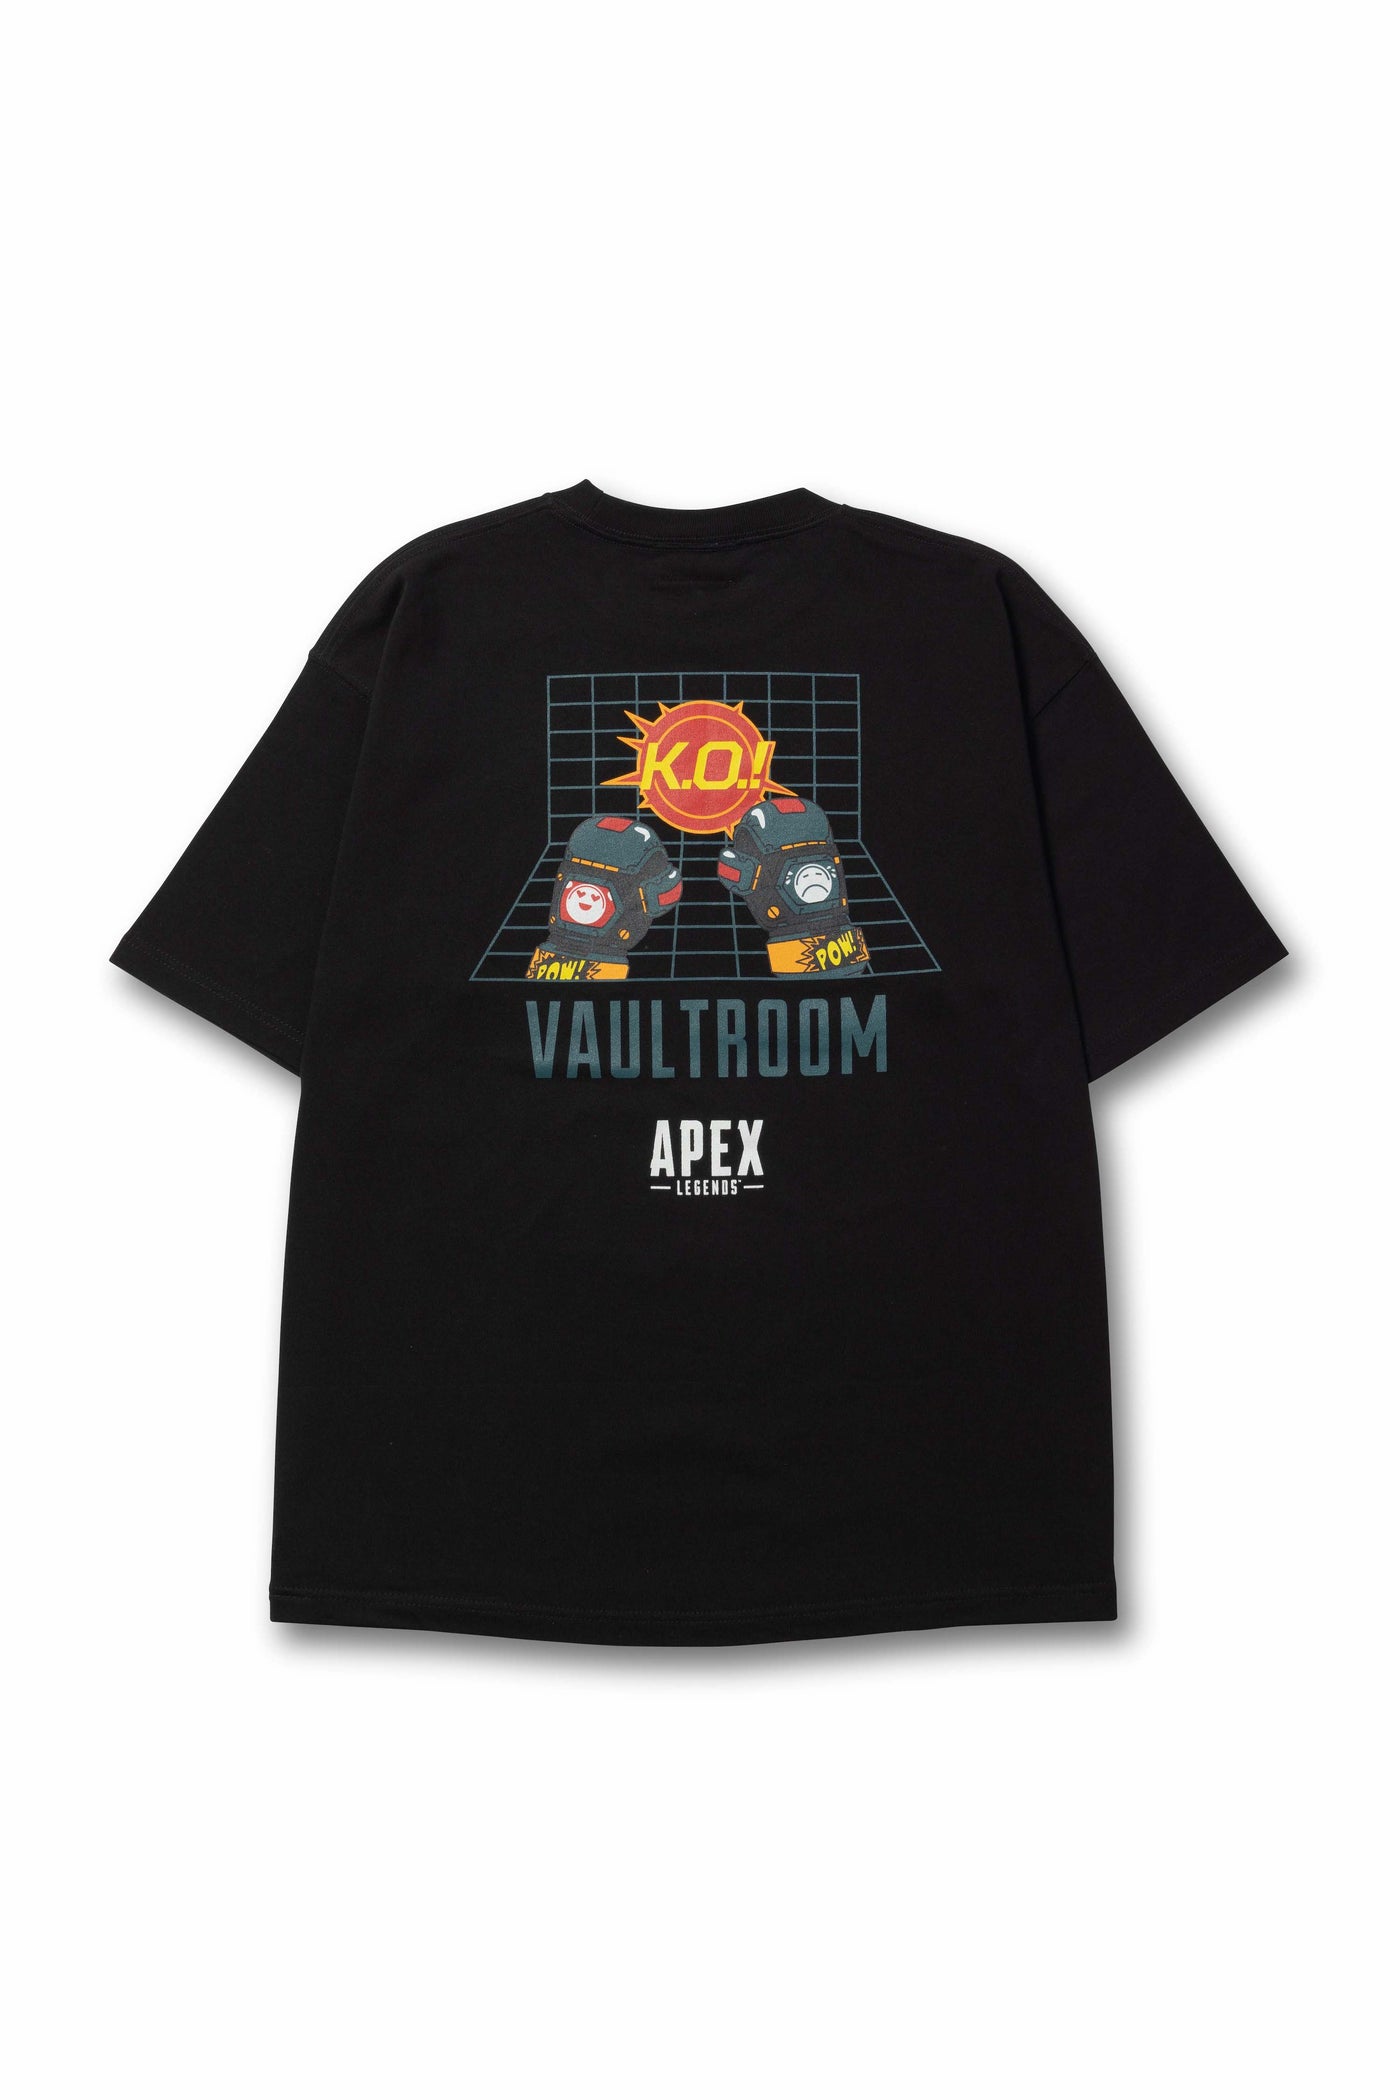 vaultroom apex パスファインダー TEE BLACK - Tシャツ/カットソー